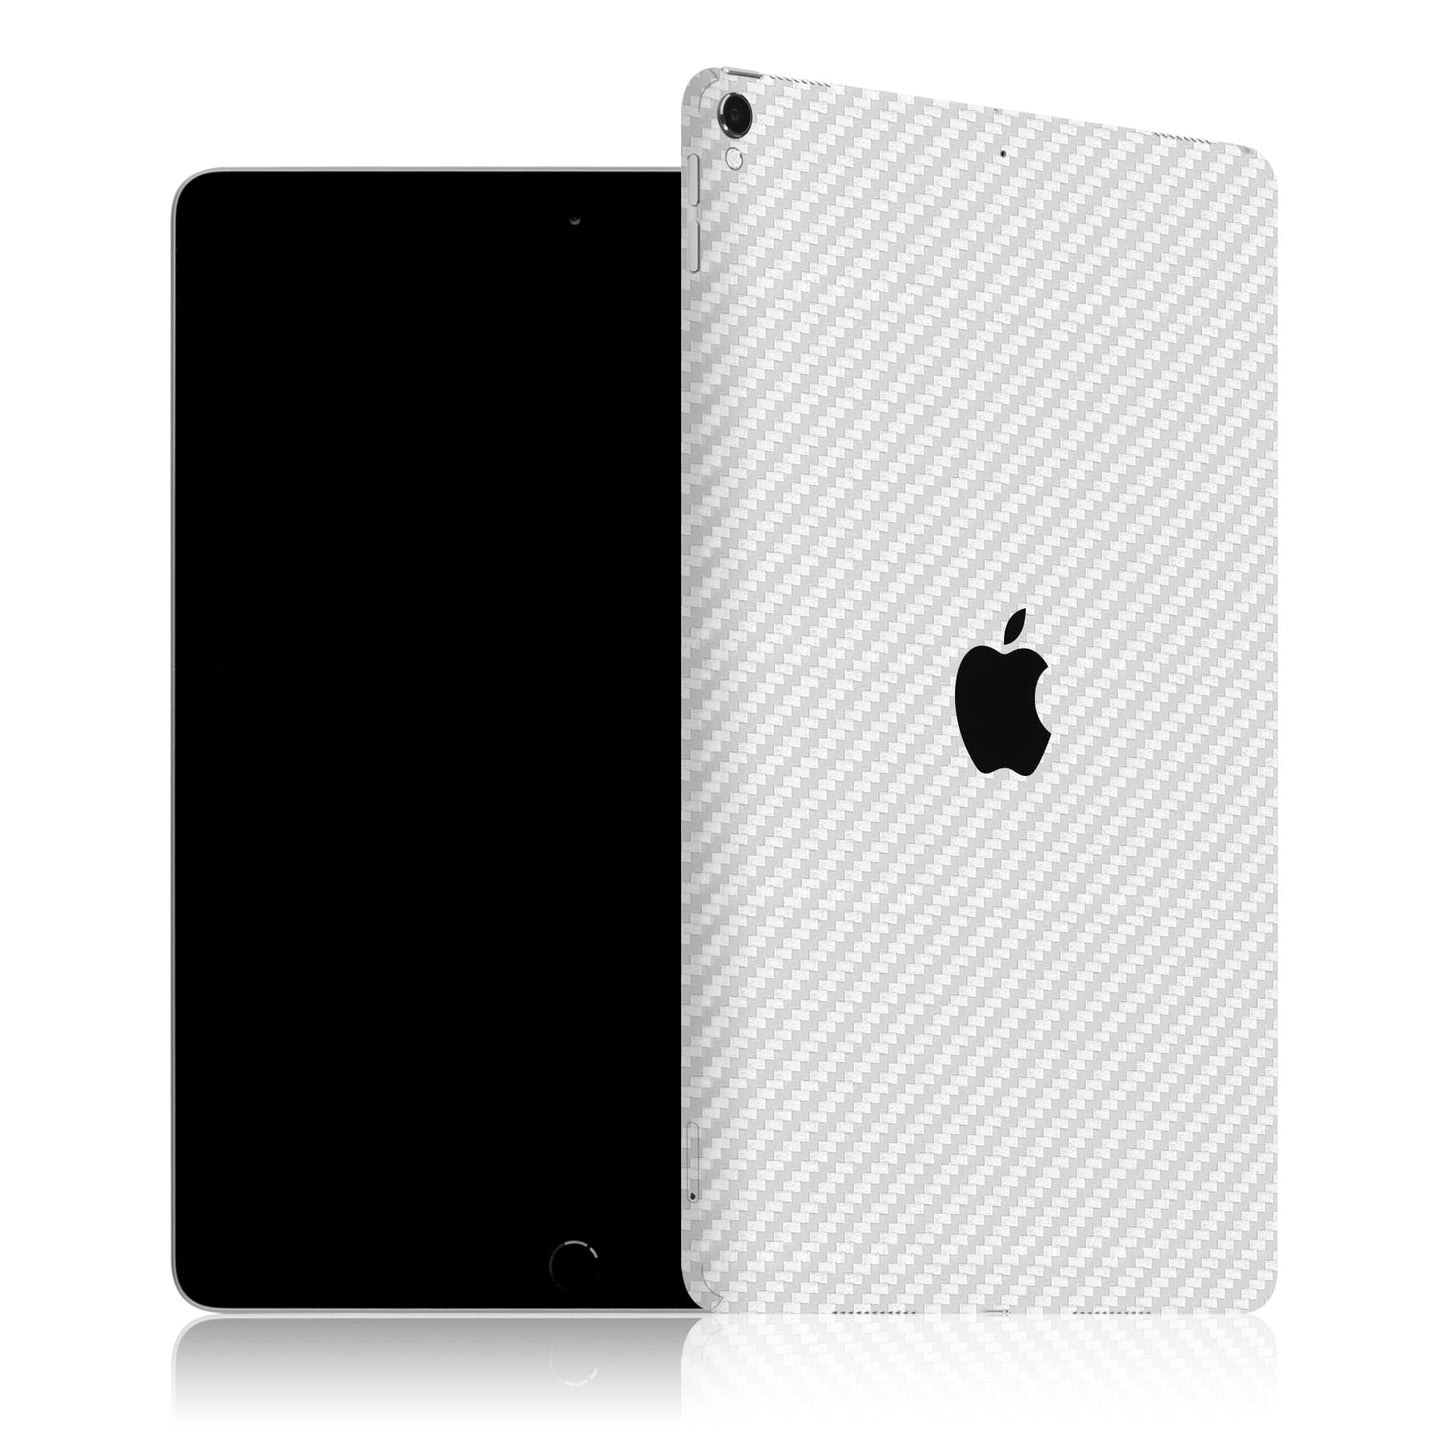 iPad Pro 10.5" (2017) - Carbon